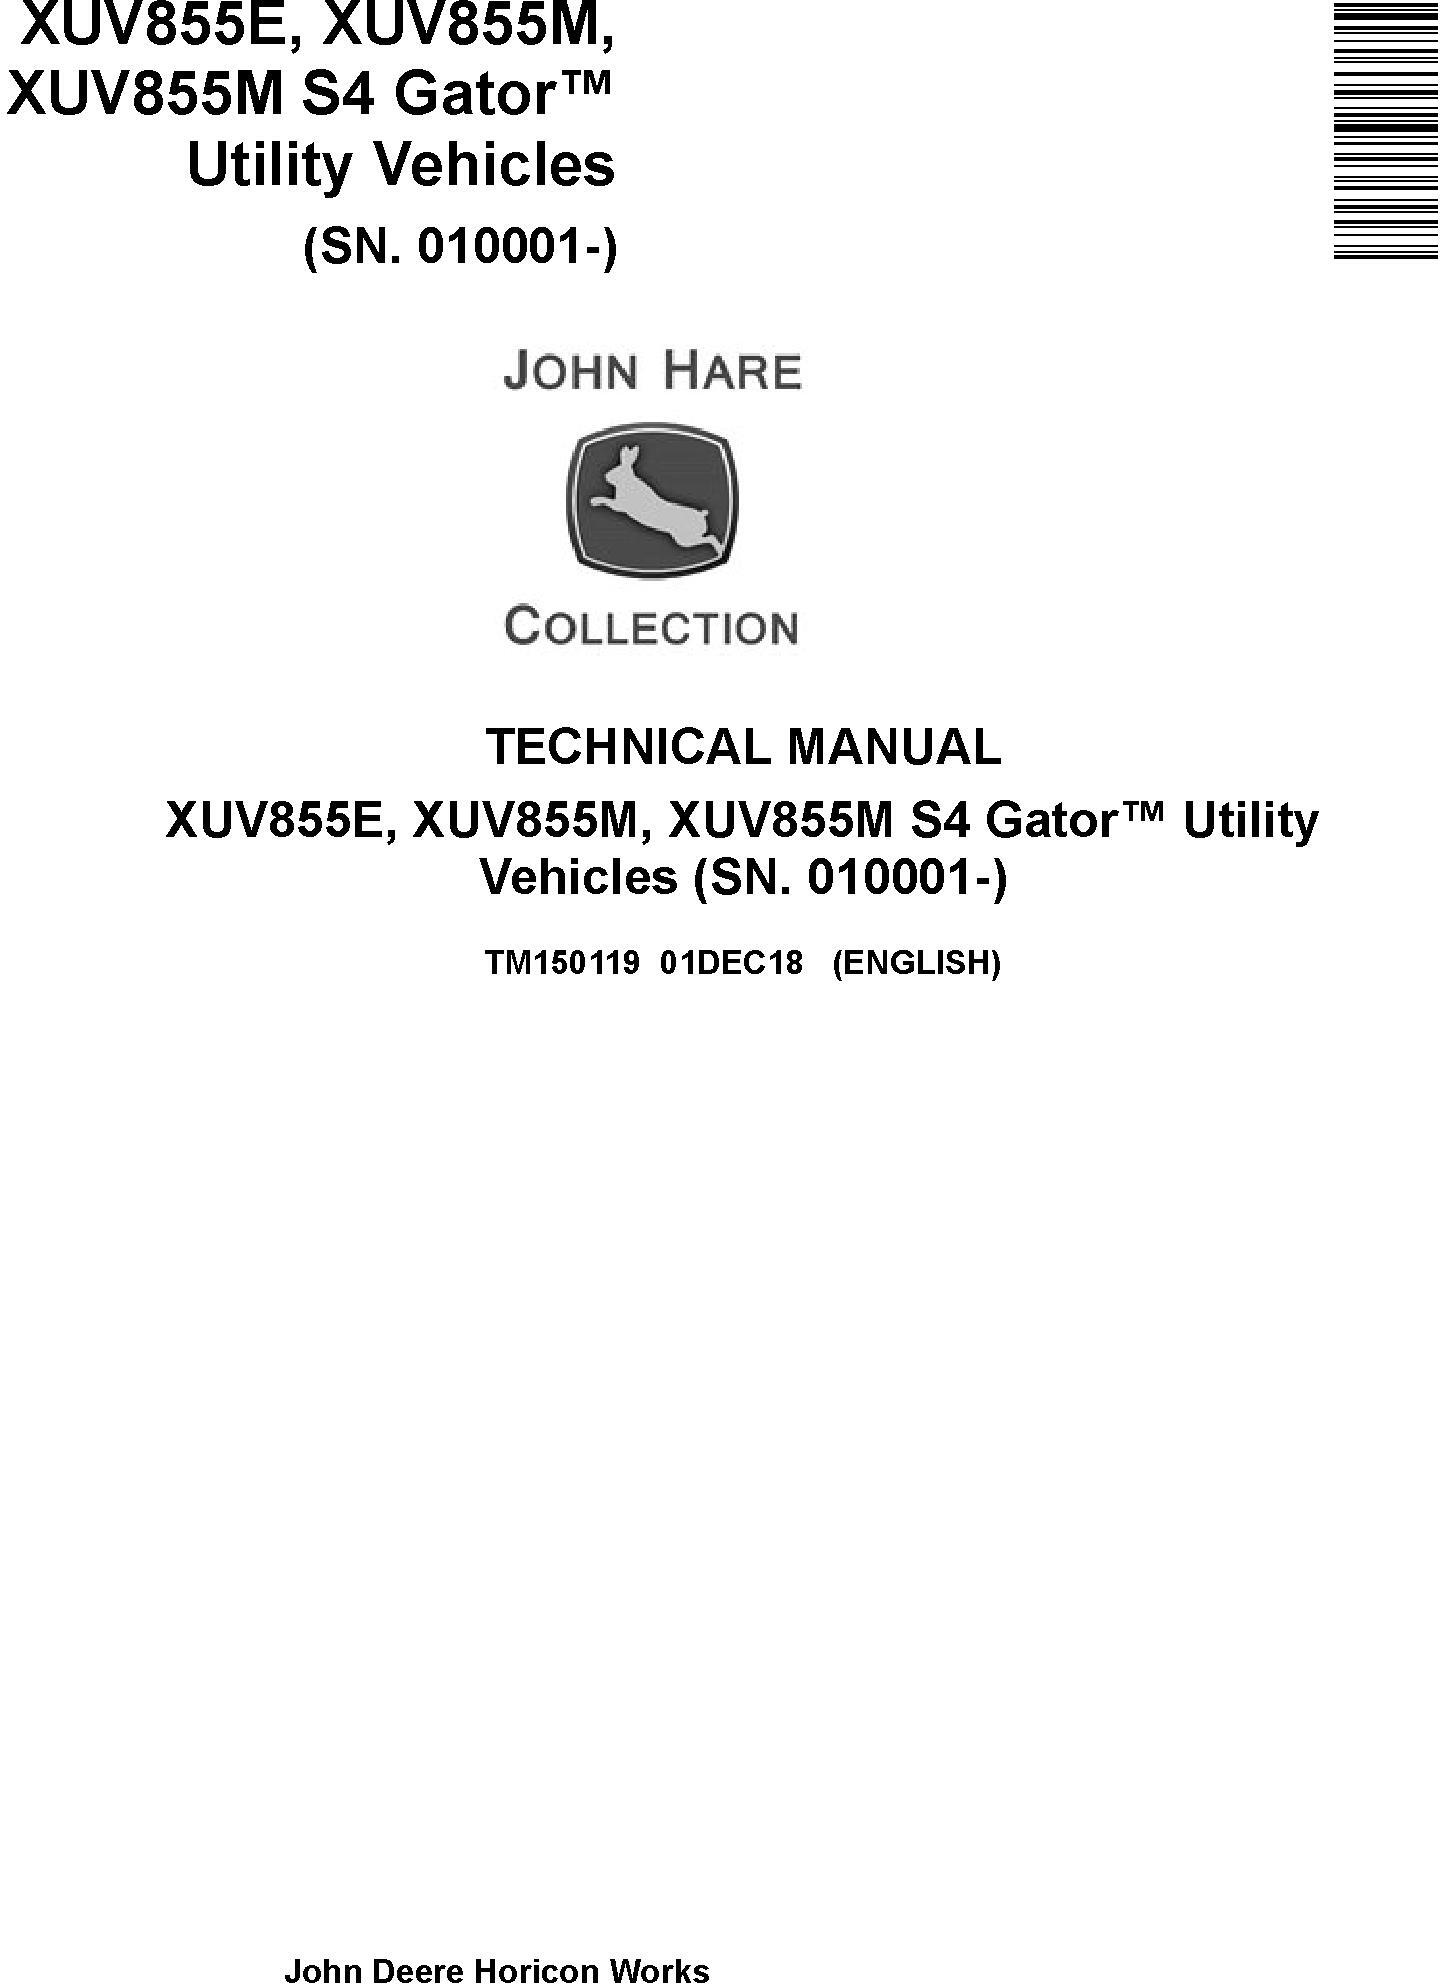 John Deere XUV855E XUV855M S4 Gator Utility Vehicles Technical Manual TM150119